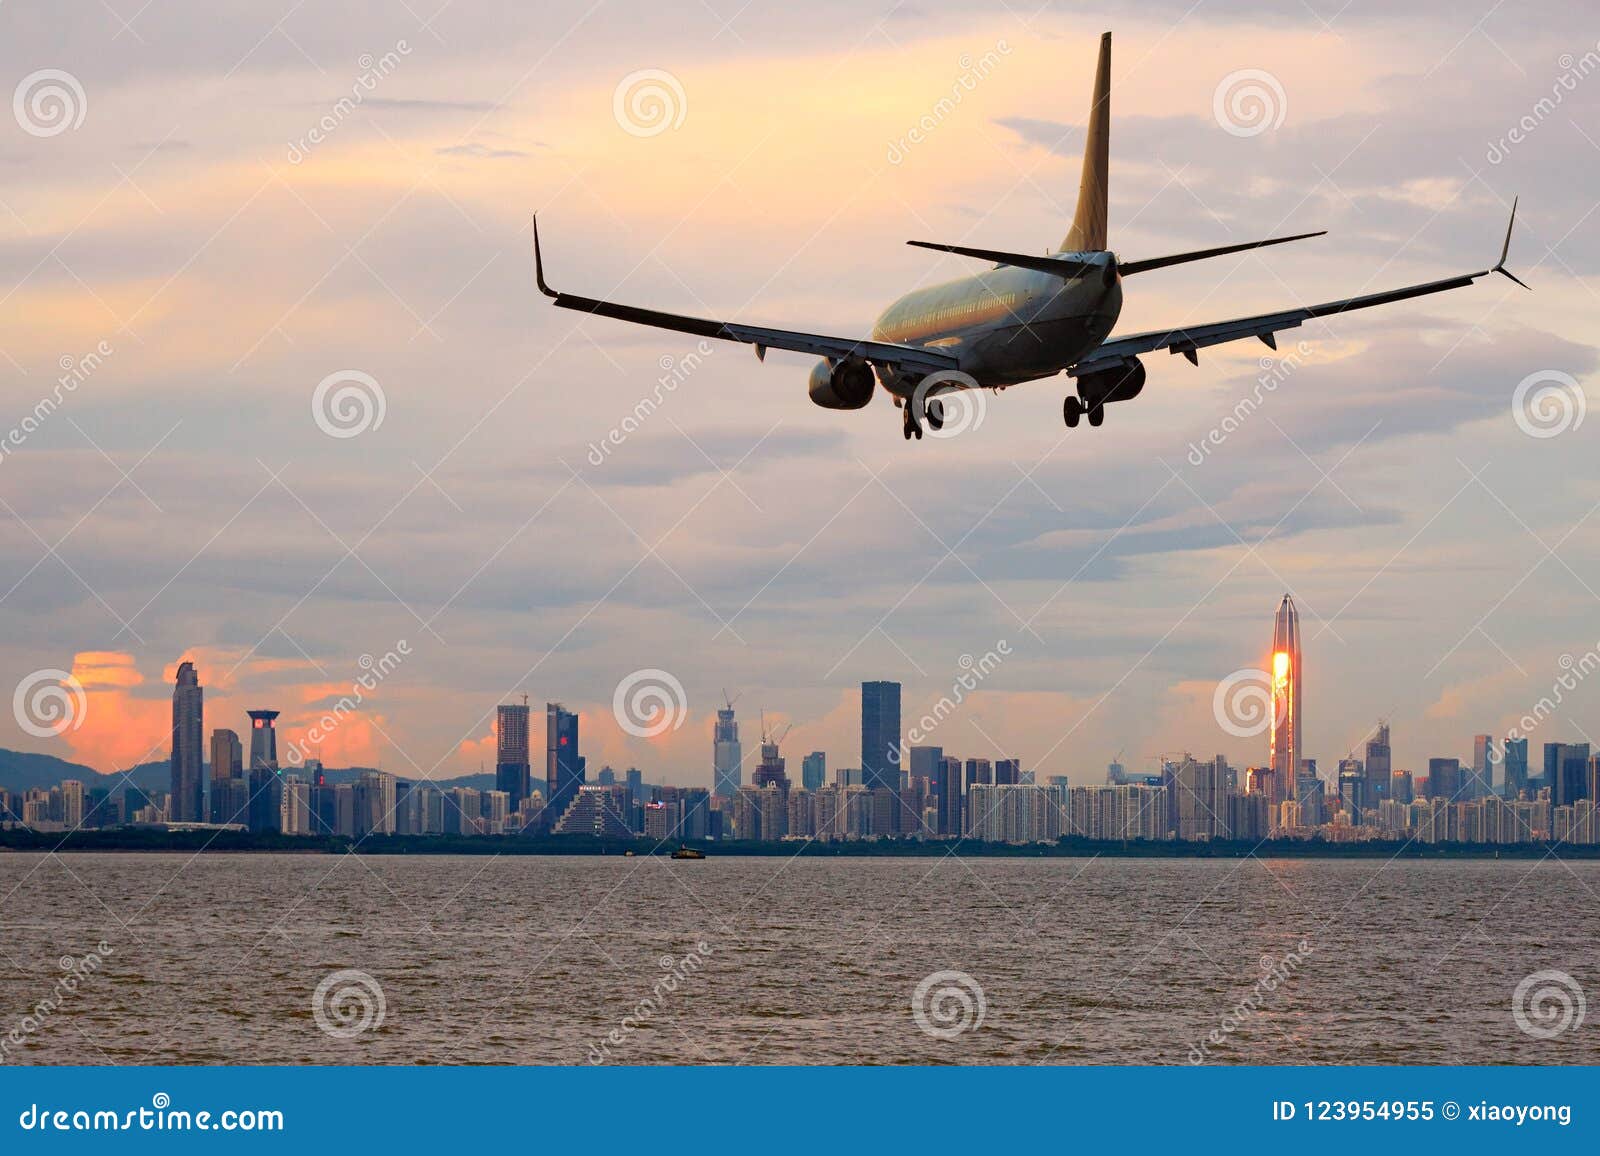 passenger jet airliner plane arriving or departing shenzhen, china